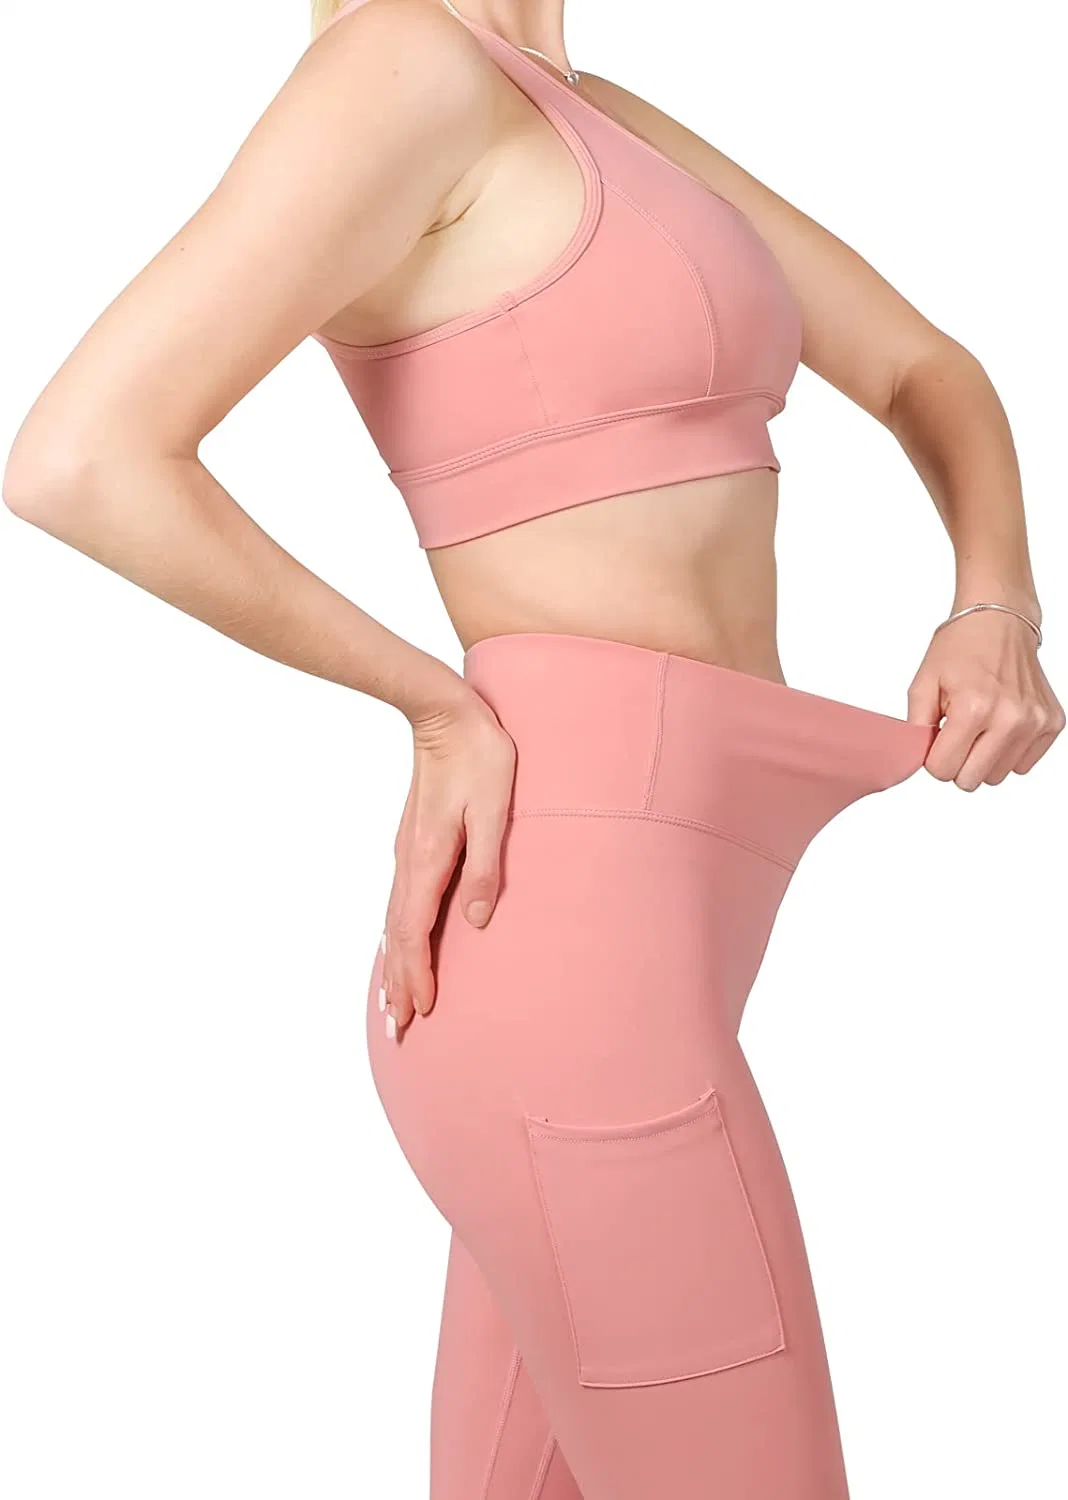 Fitness Gym Wear Yoga Clothing Sportswear 2 PCS Set for Woman